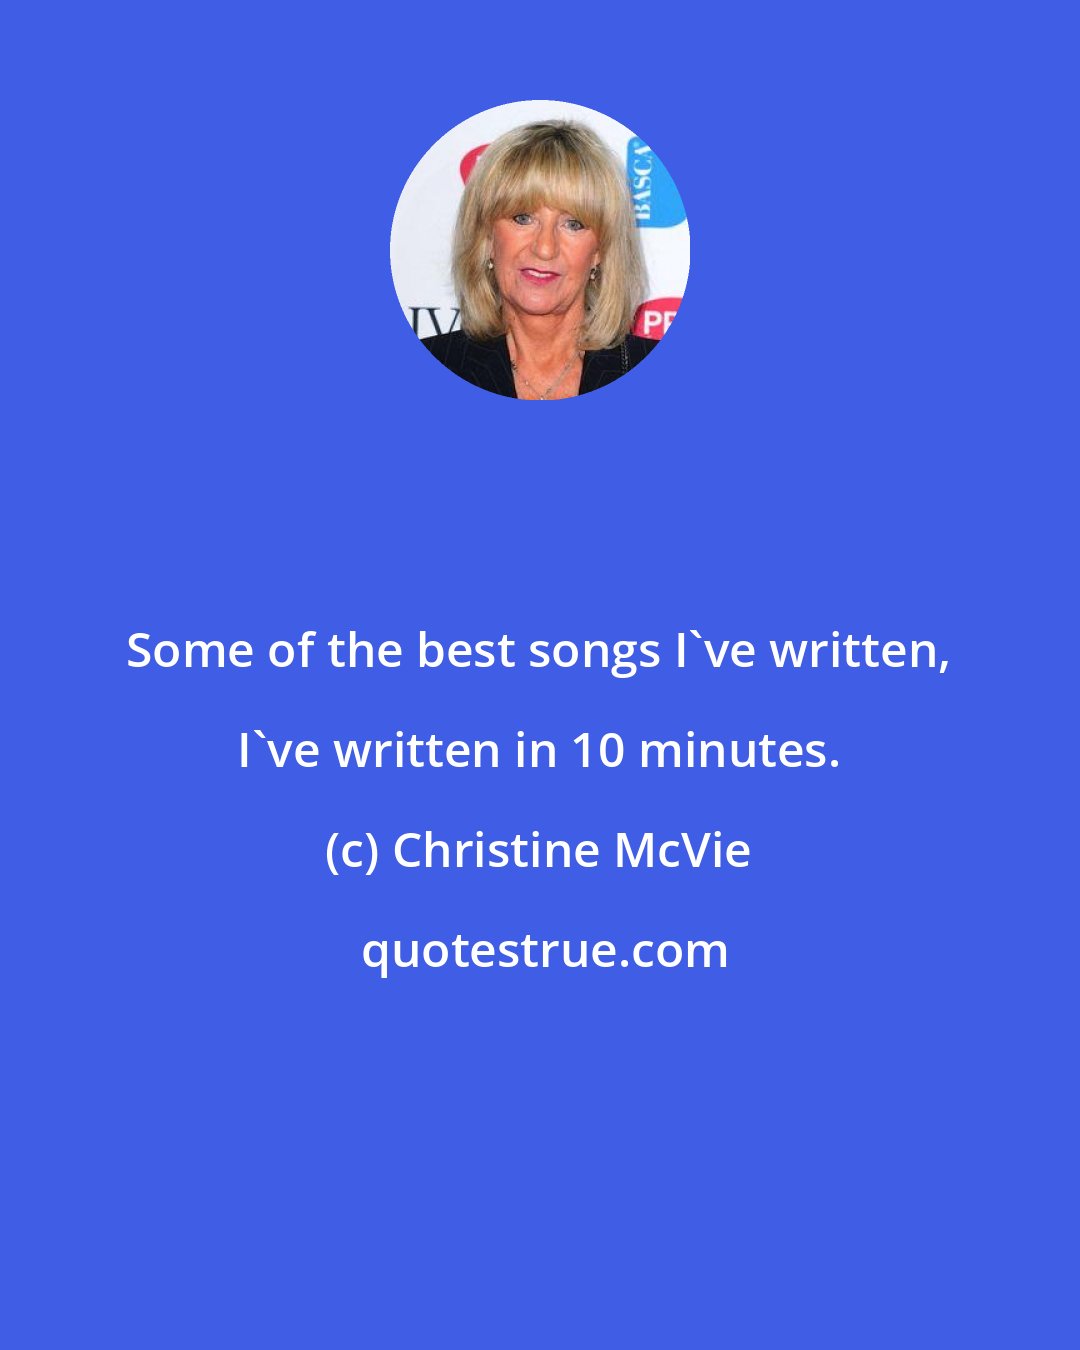 Christine McVie: Some of the best songs I've written, I've written in 10 minutes.